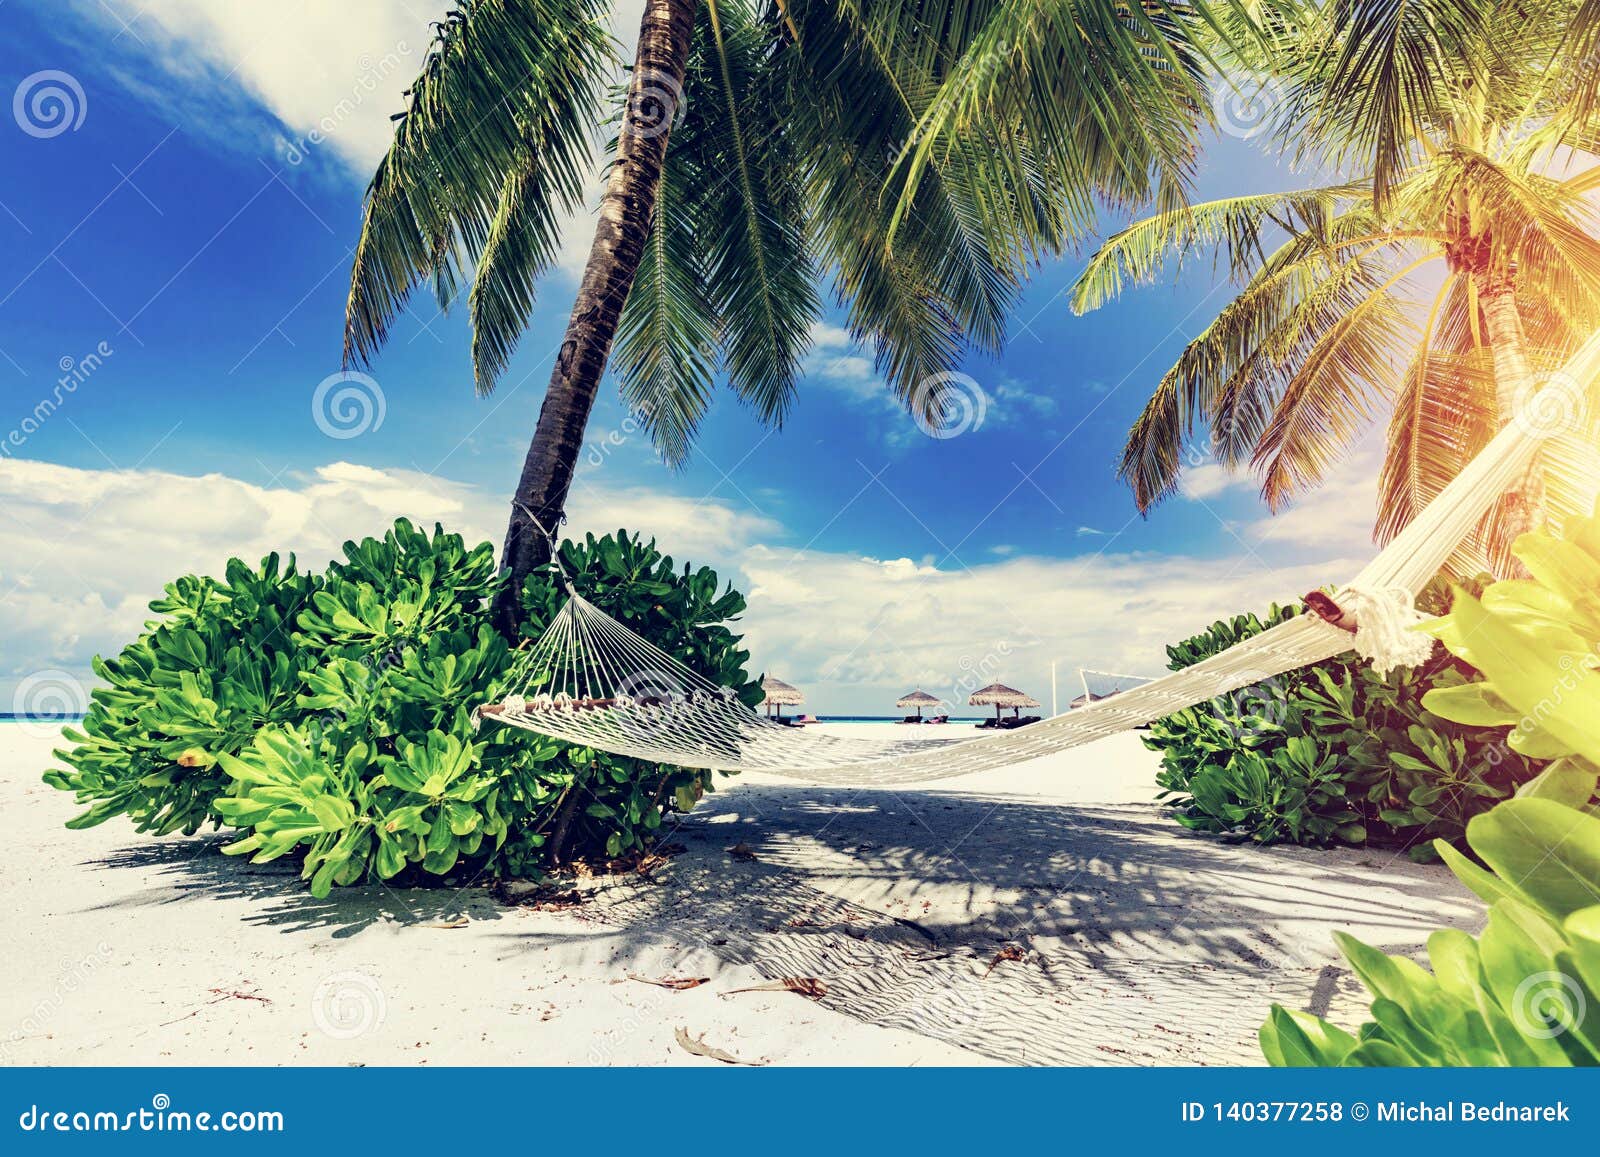 Hammock and Palms on the Beach Stock Photo - Image of maldives, travel ...